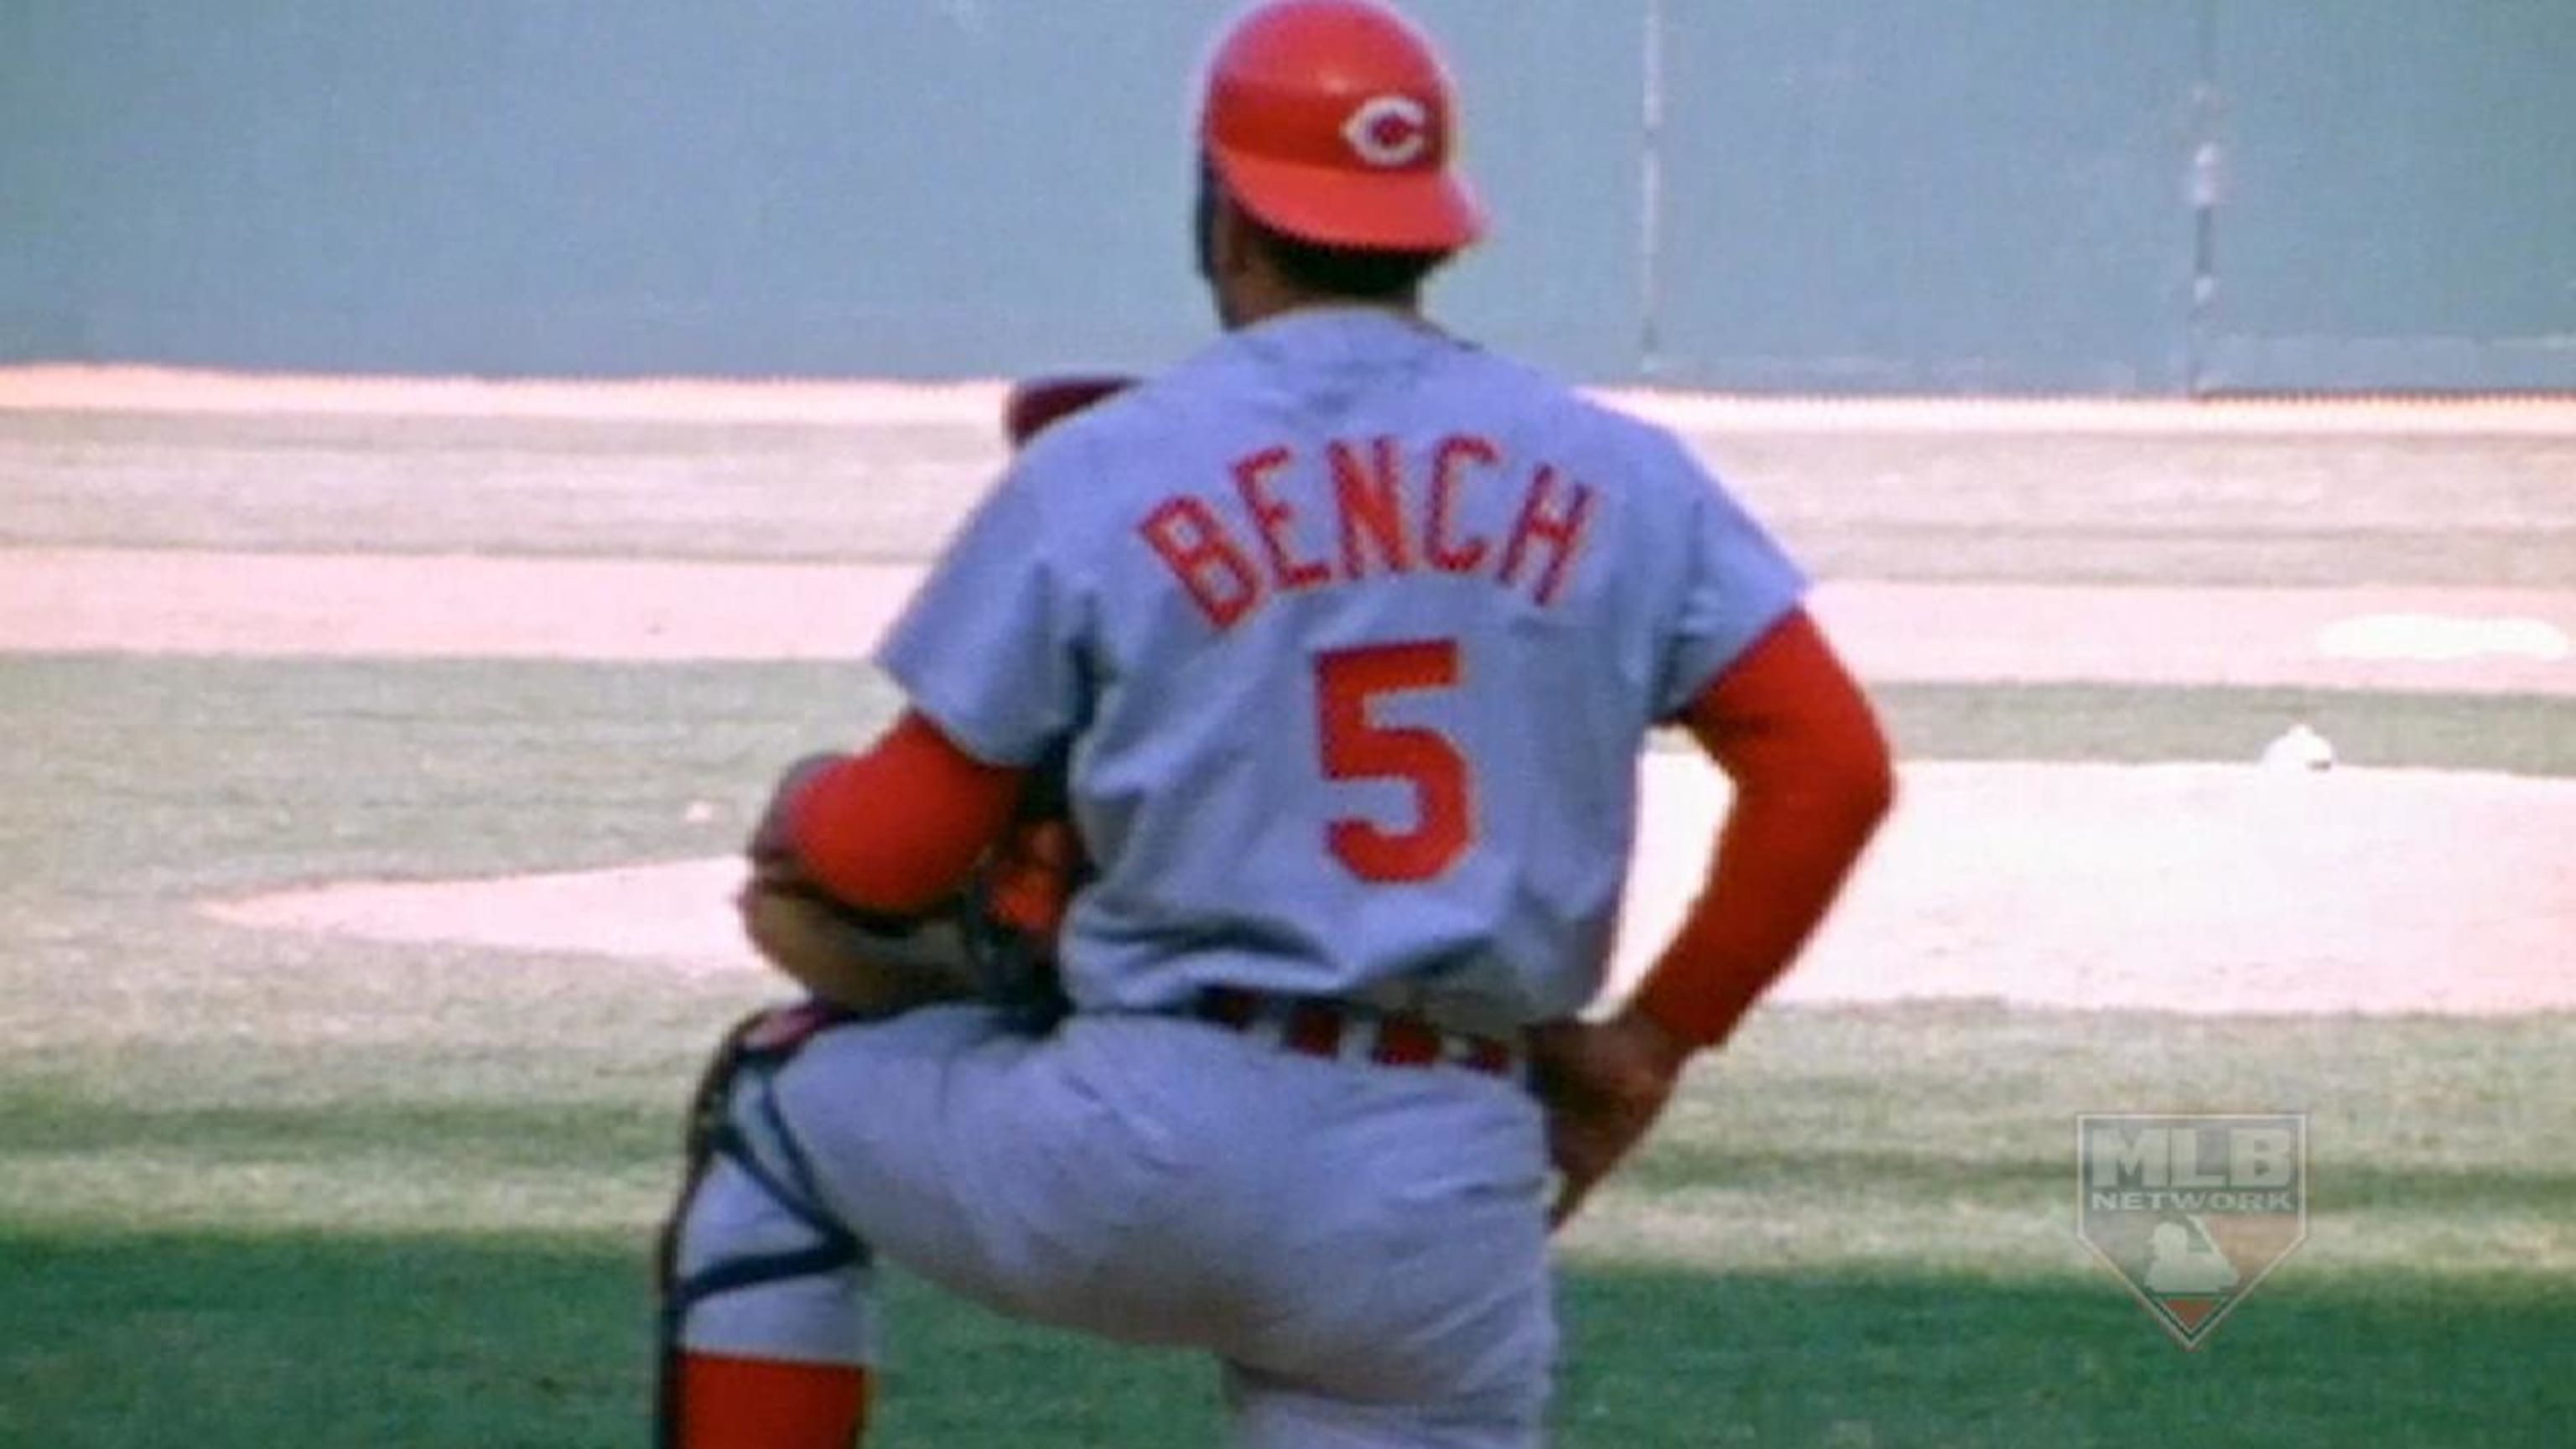 Baseball - Johnny Bench - Images